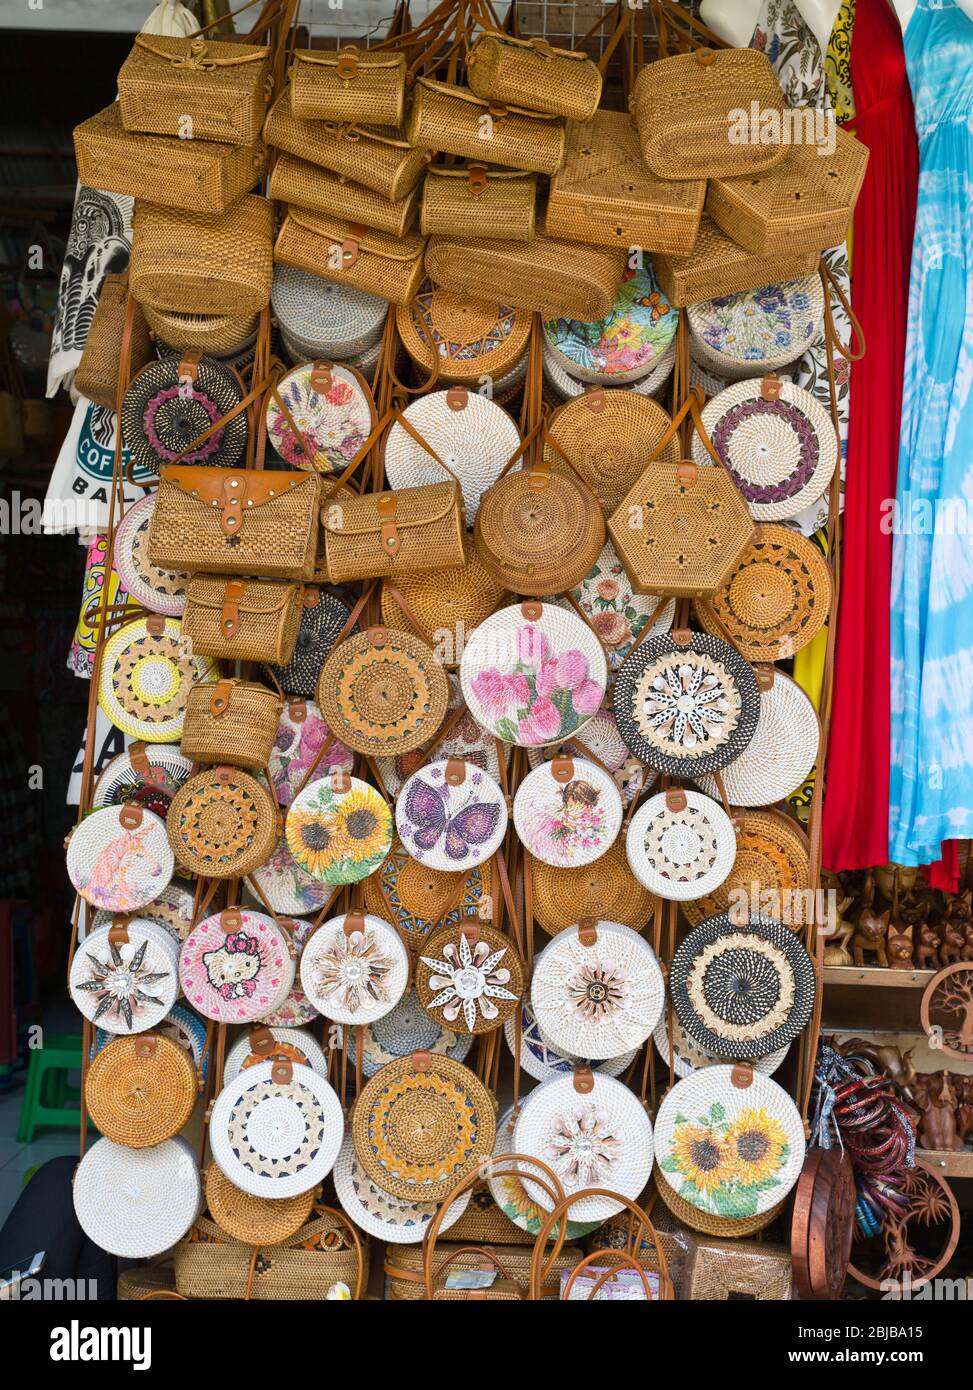 dh Pasar Seni Guwang Sukawati BALI INDONESIA Borse intrecciate artigianali mercatino dell'artigianato balinese artigianale Foto Stock